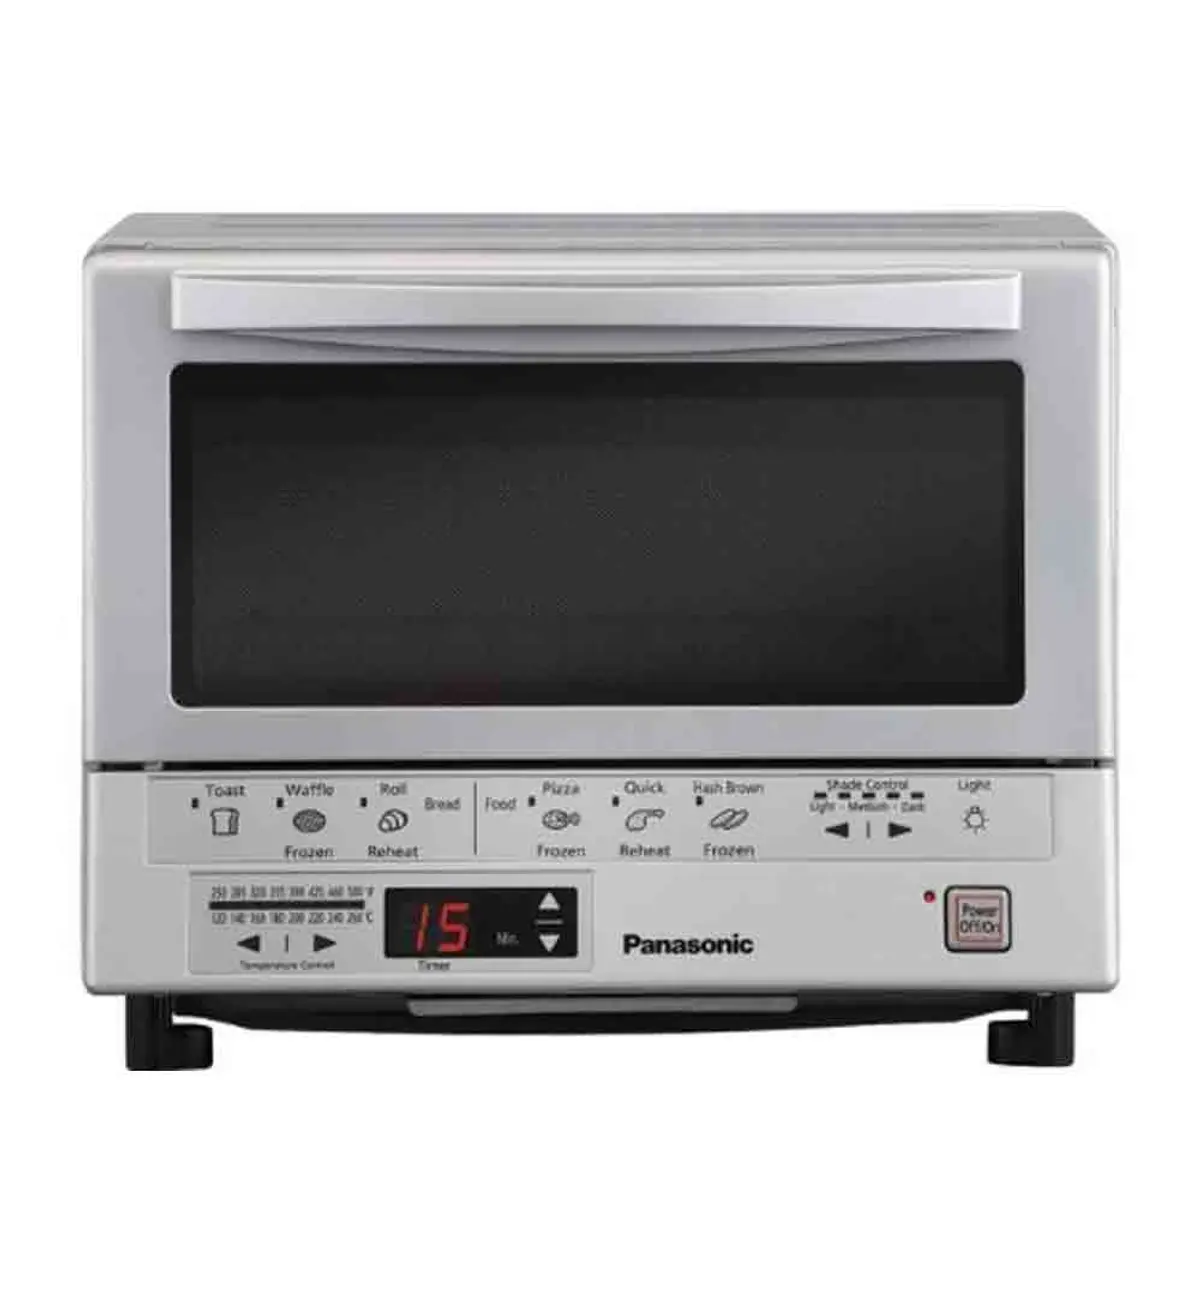 Panasonic-Flash-Xpress-Toaster-Oven